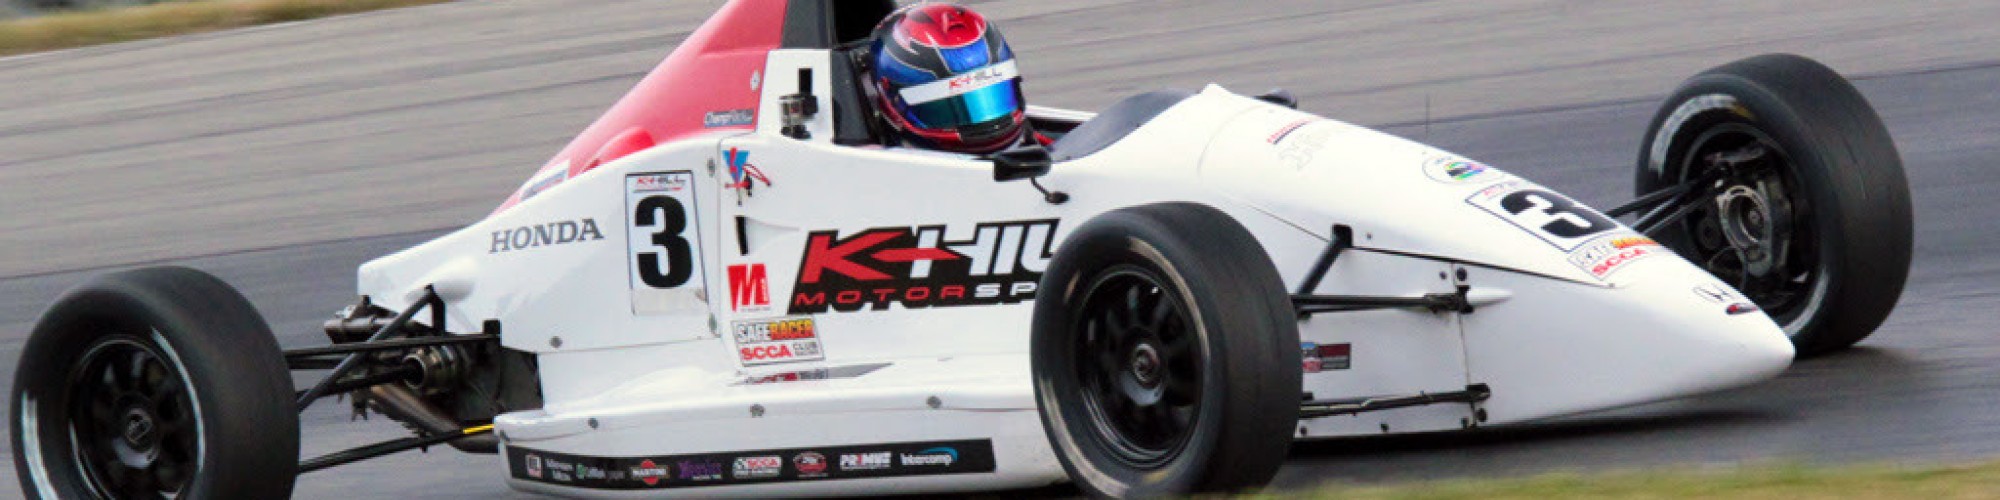 K-Hill Motorsports